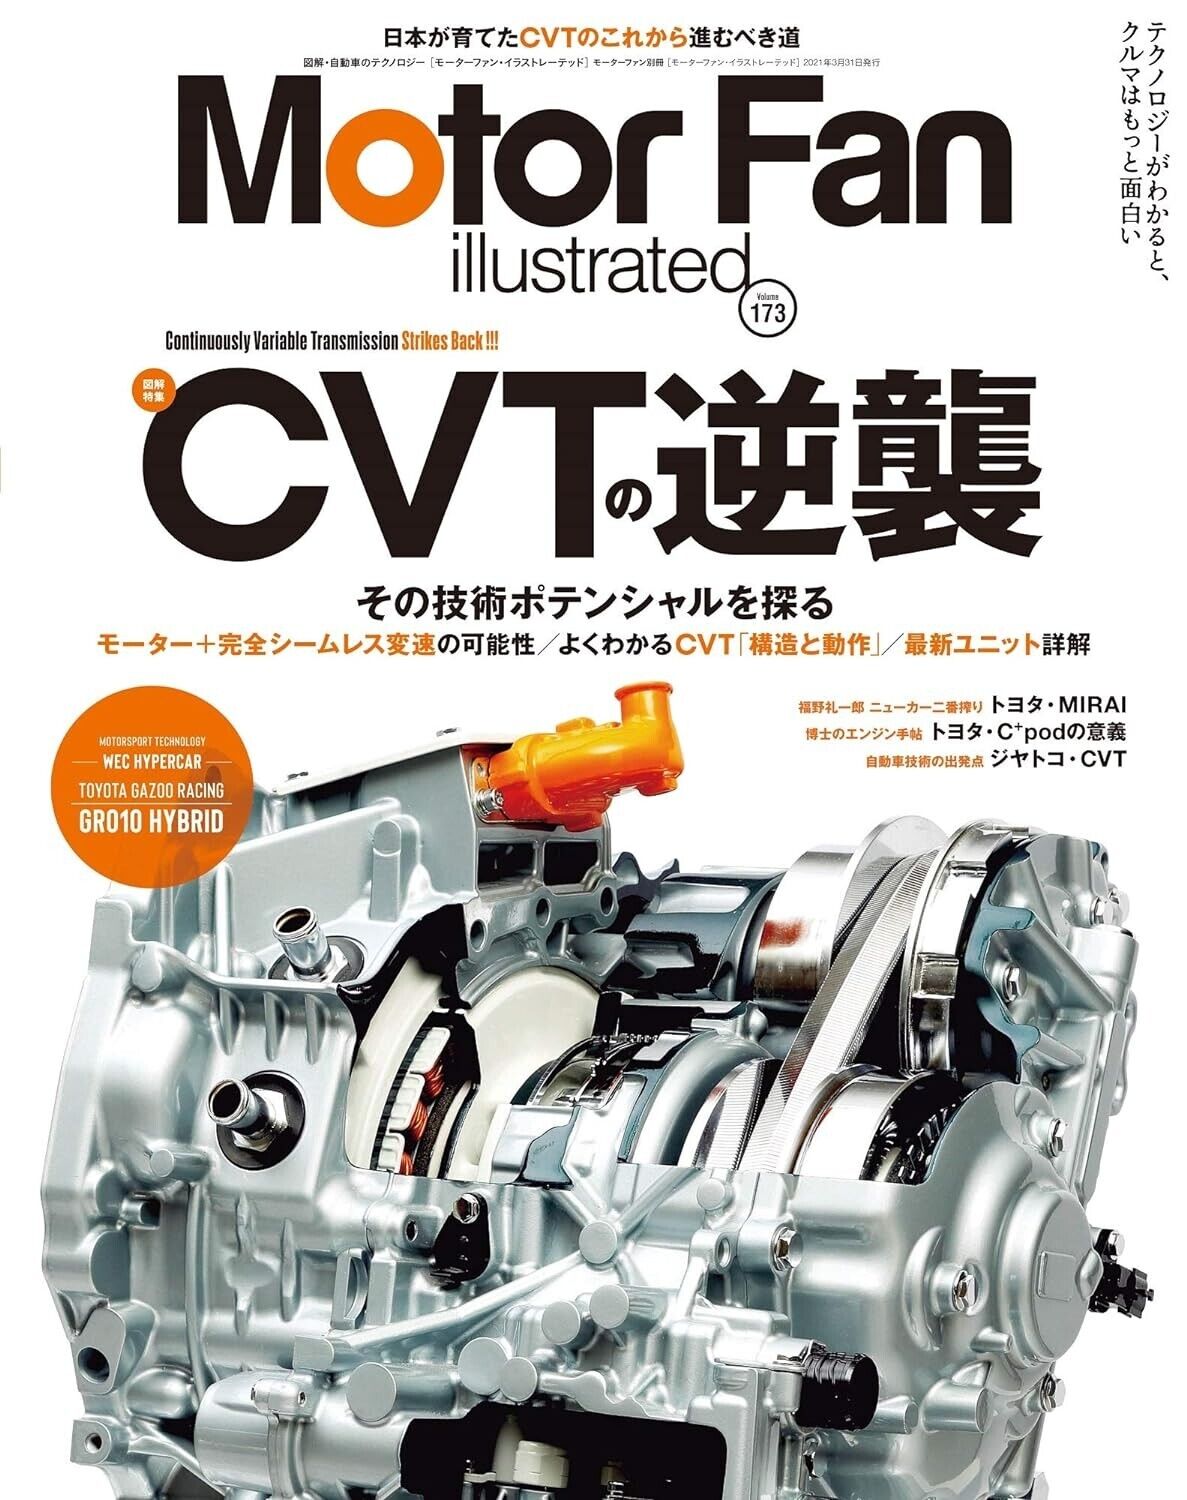 477964335X Mook MOTOR FAN illustrated Automobile Technology CVT MOTORSPORT GAZOO